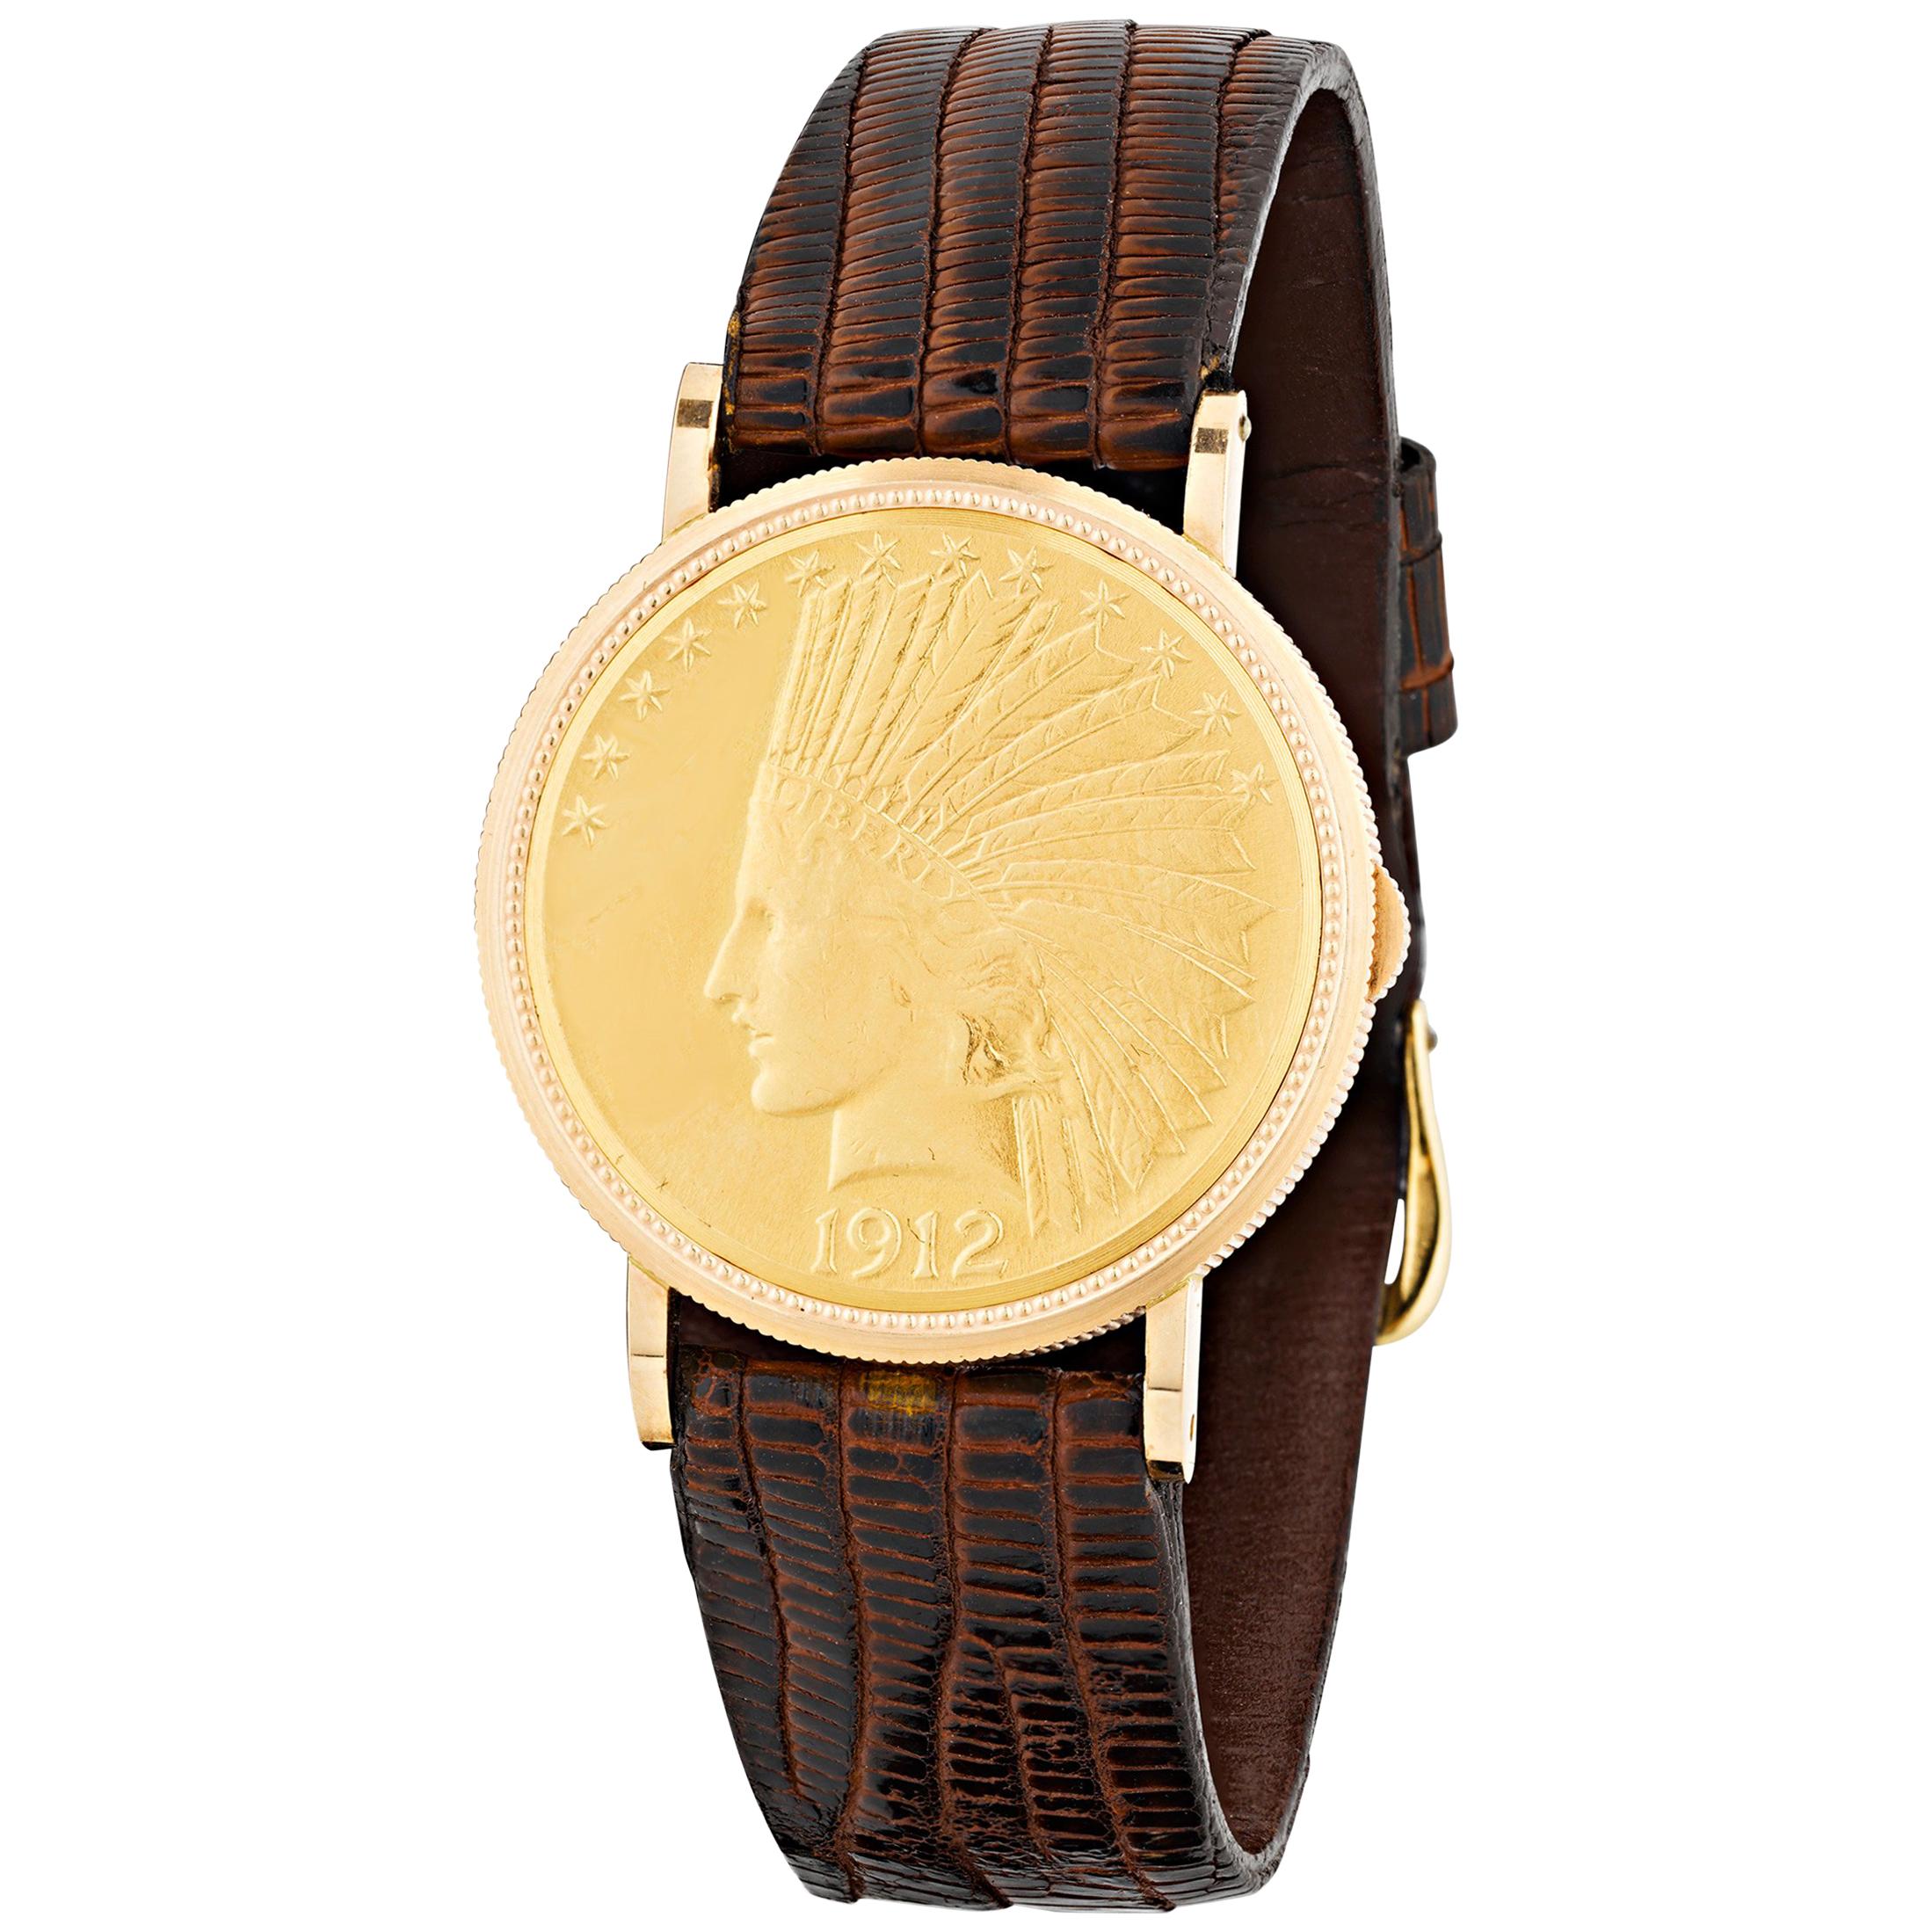 Joe DiMaggio's $10 Gold Coin Presentation Watch